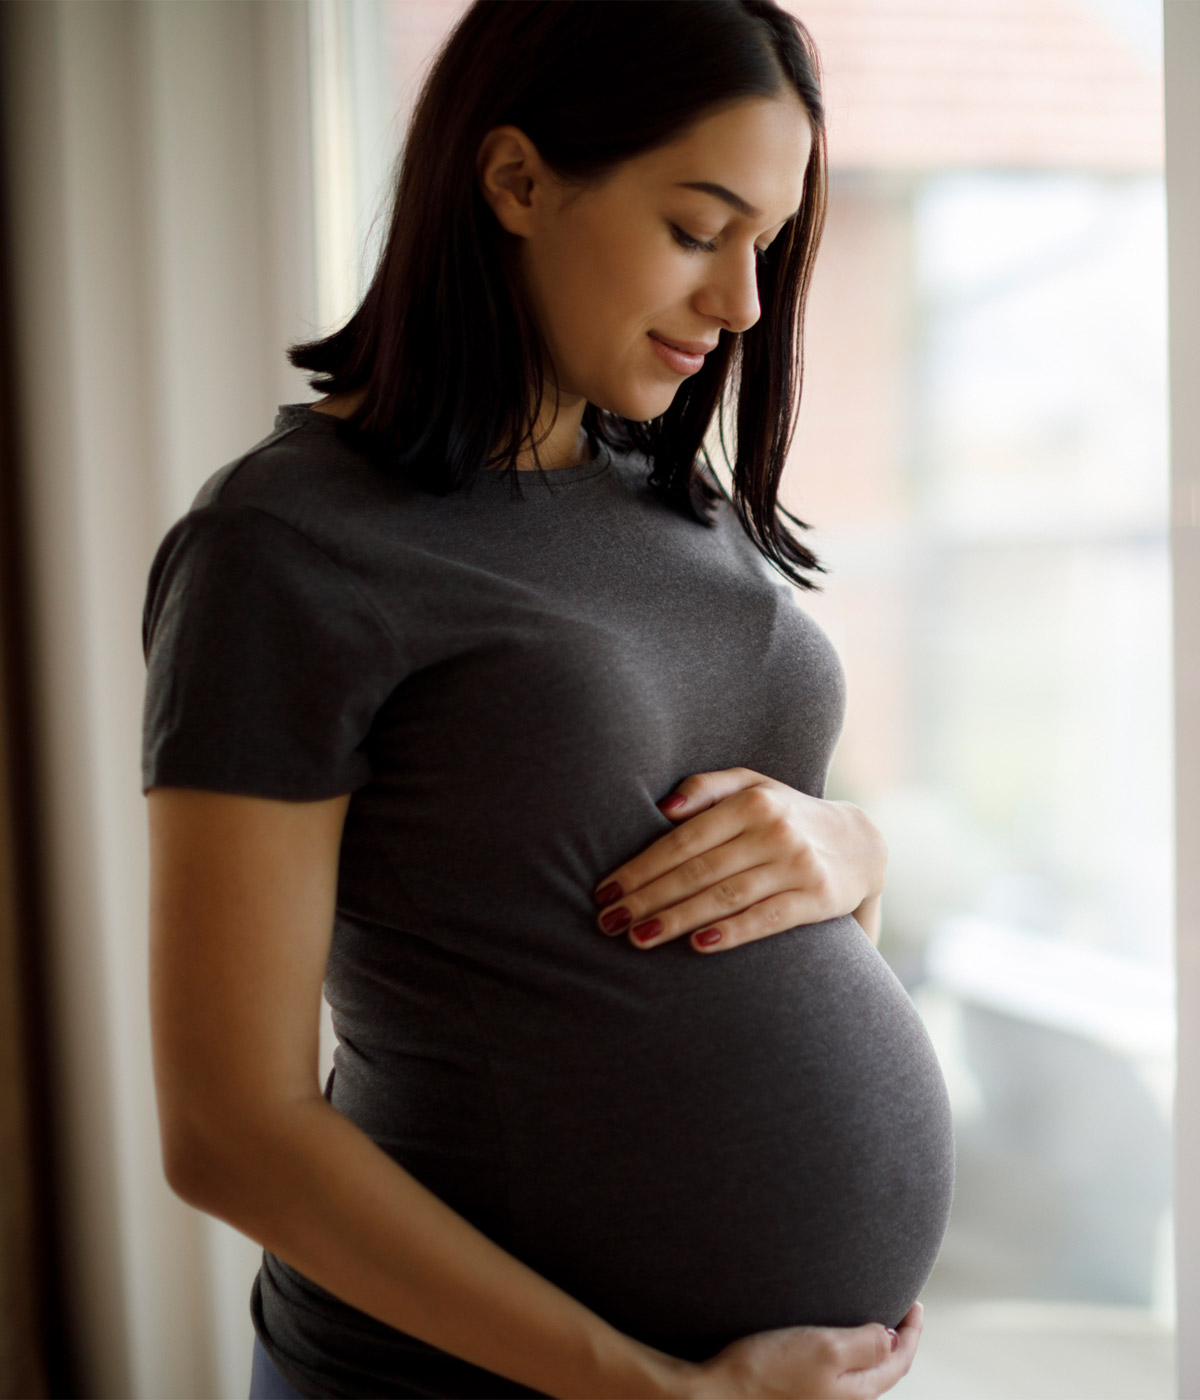 pregnant woman gazing downward